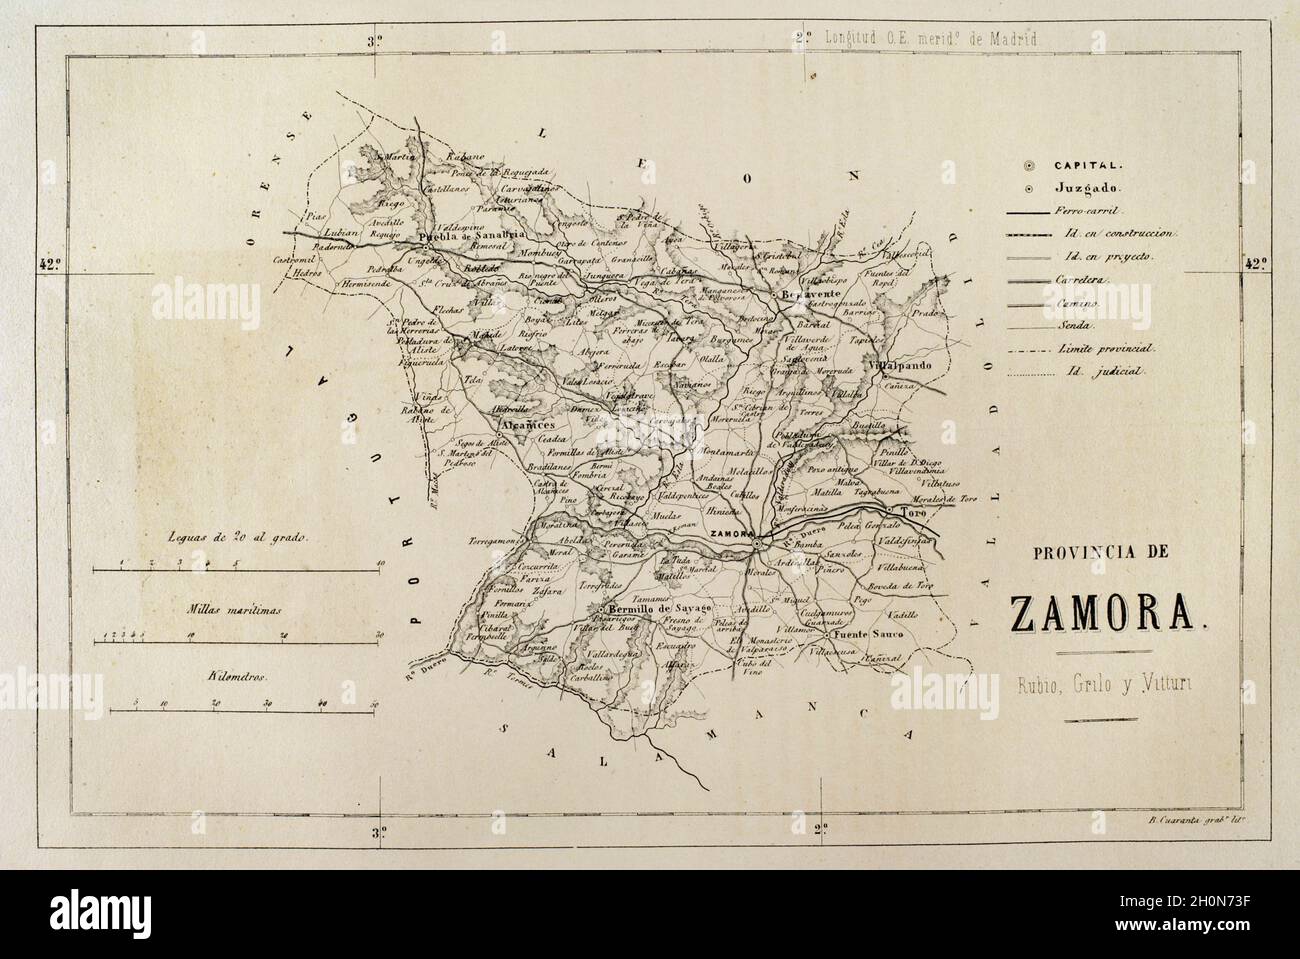 Spain. Map of the province of Zamora. Cronica General de España, Historia Ilustrada y Descriptiva de sus Provincias. Asturias and Leon, 1867. Stock Photo